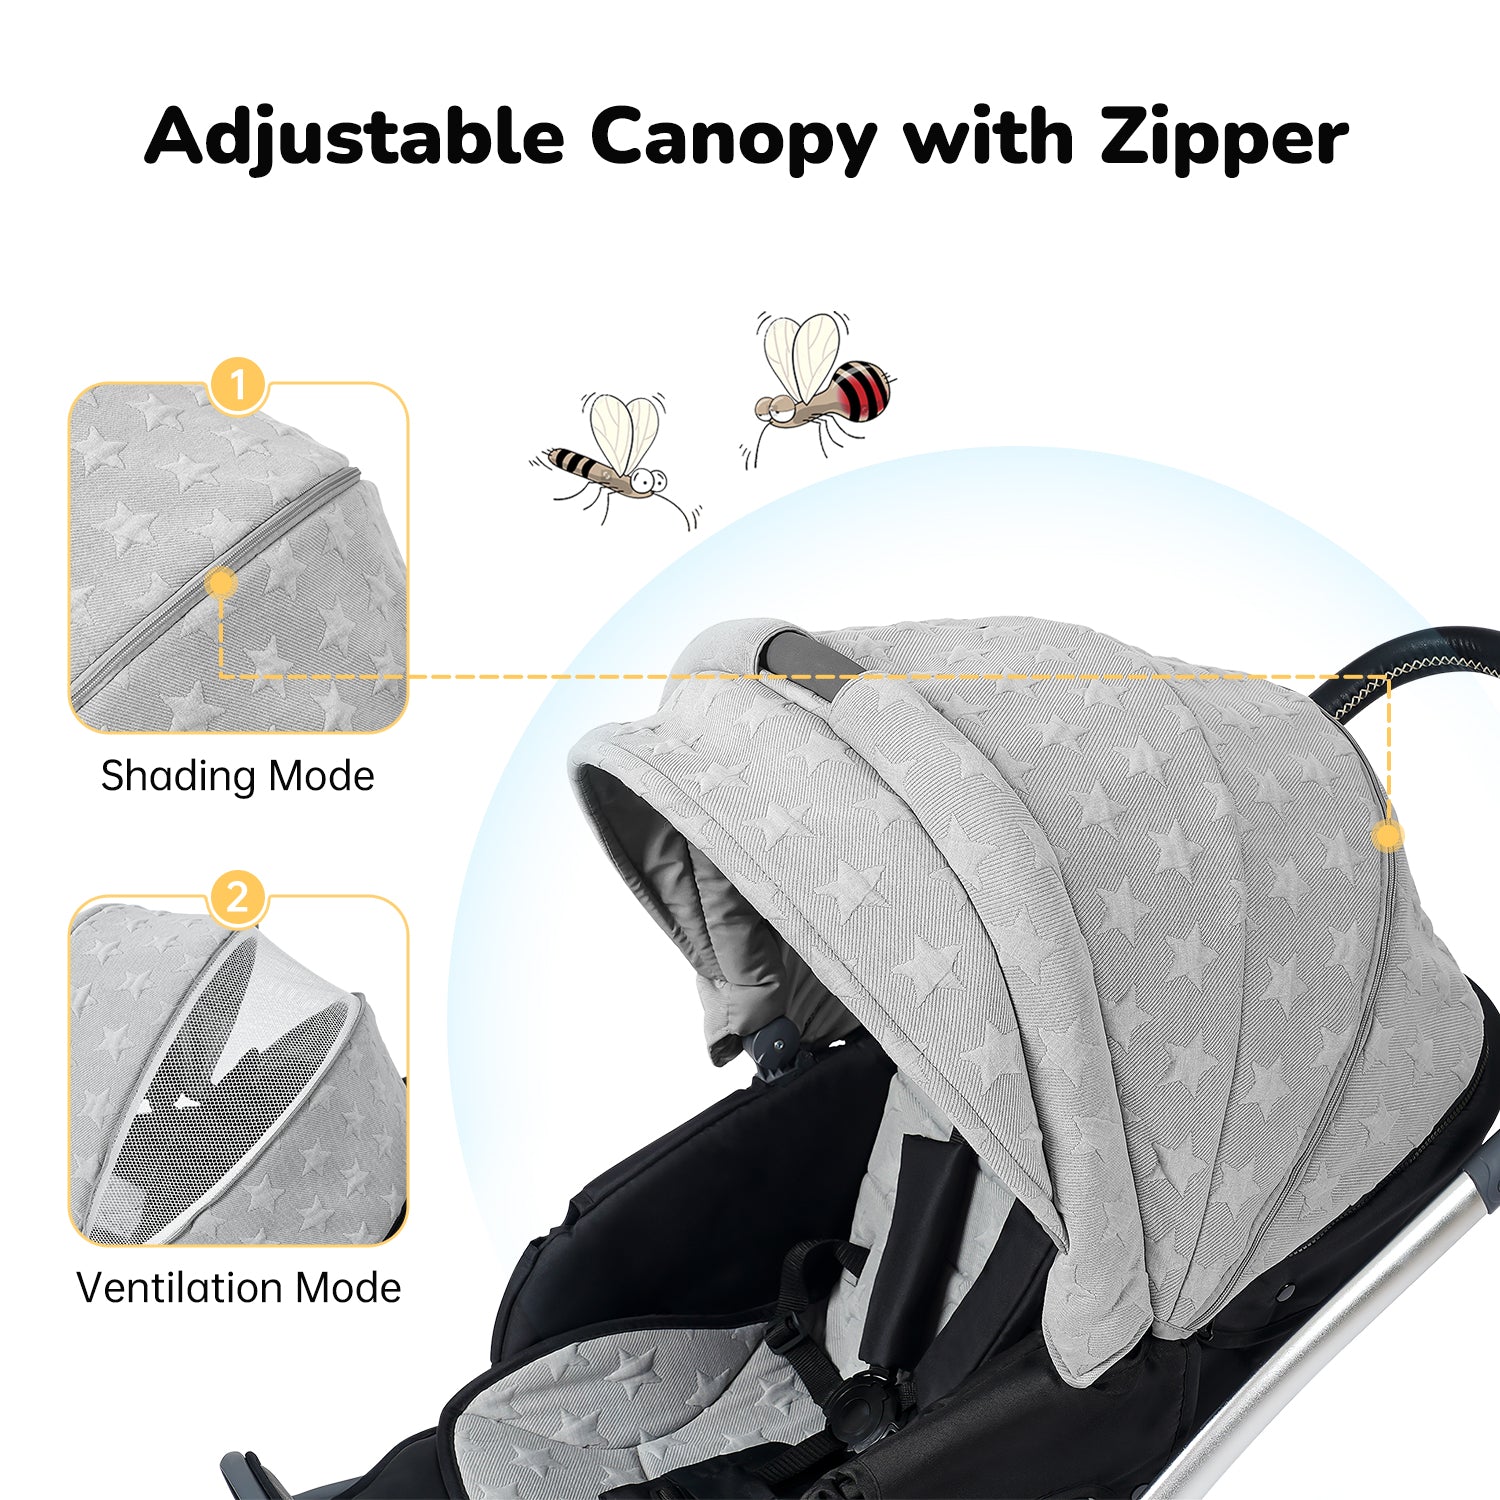 High Landscape Baby Stroller 0-36 Months